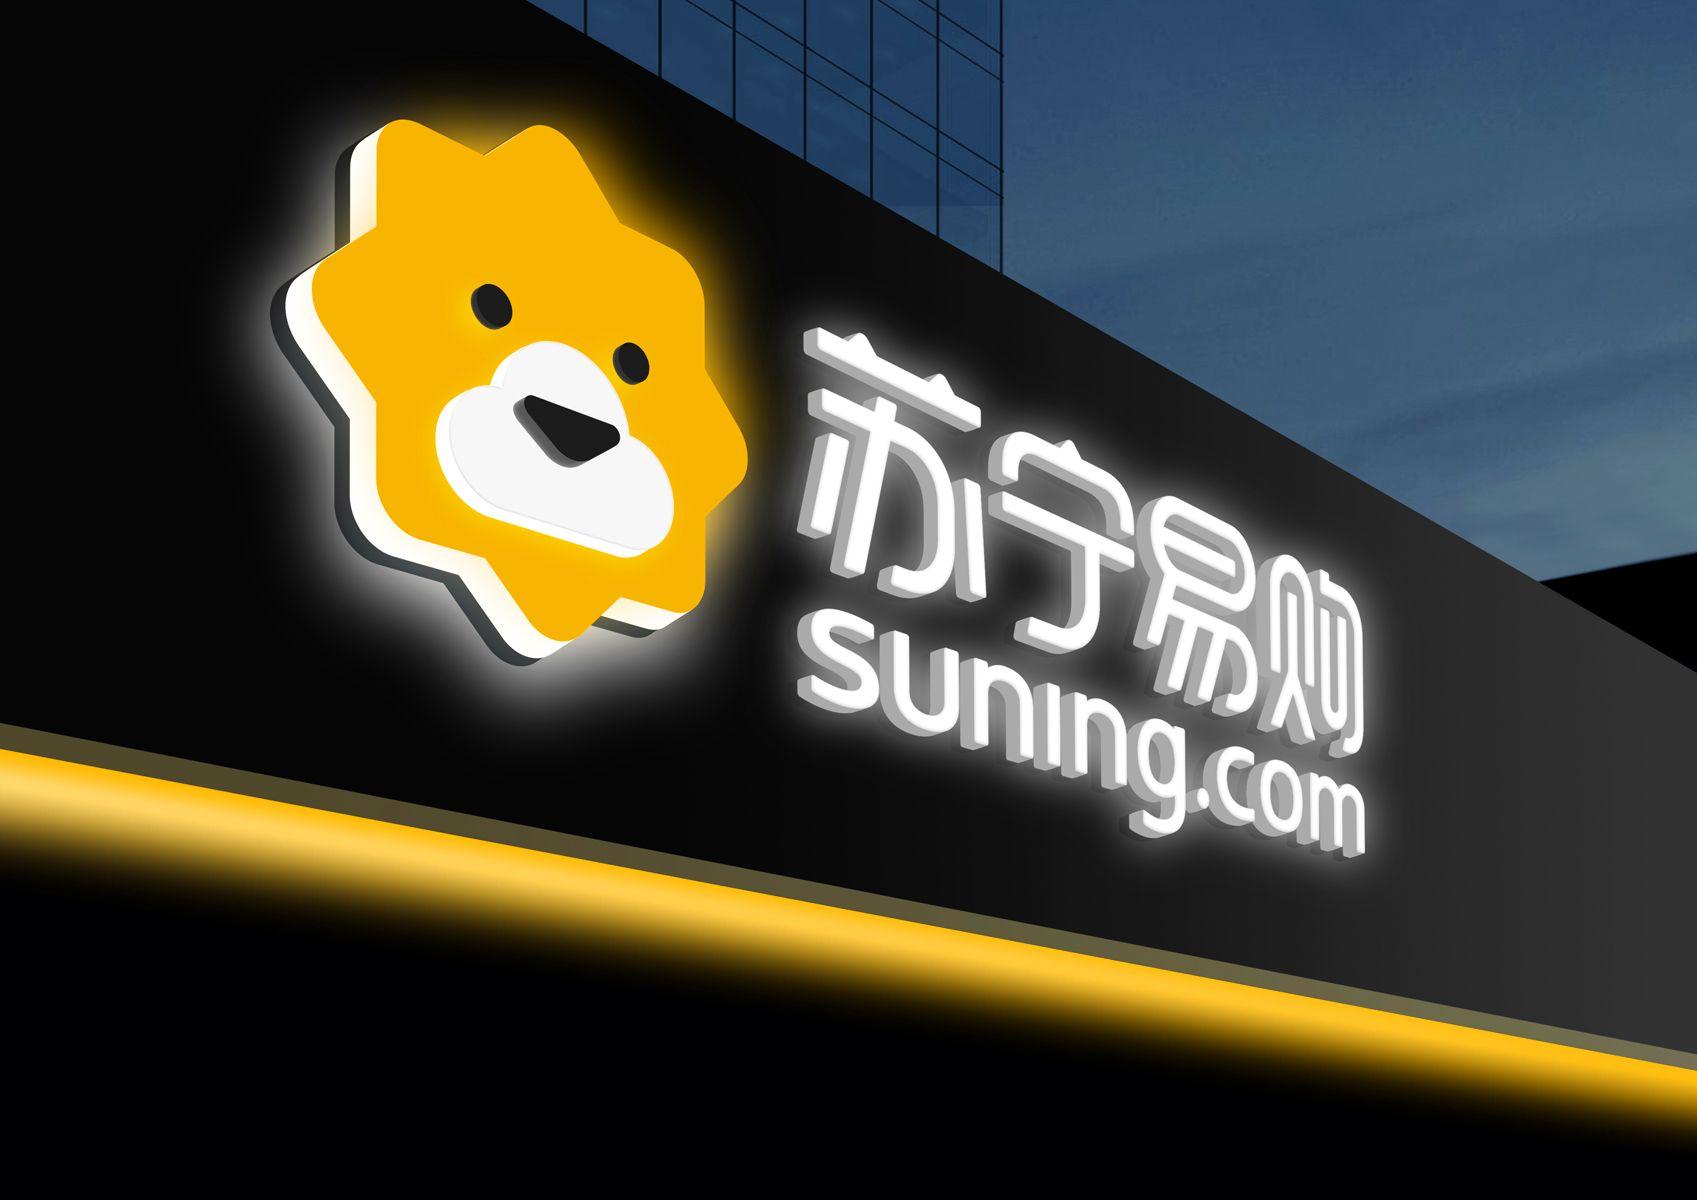 Suning Logo - Suning.com - Good Design